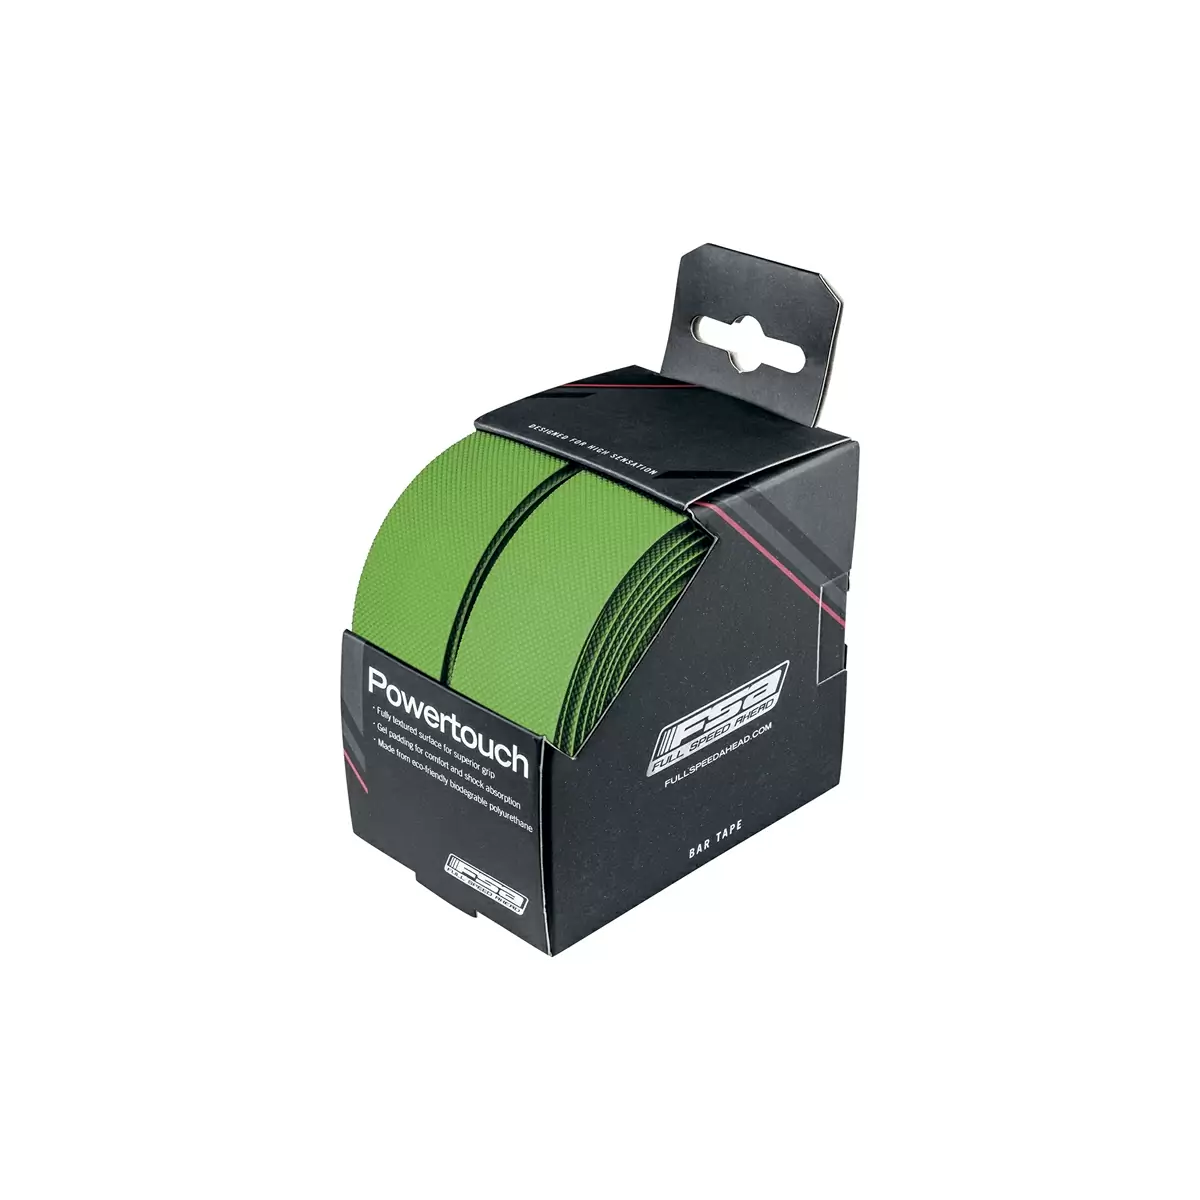 Lenkerband Green Power Touch 2014 - image